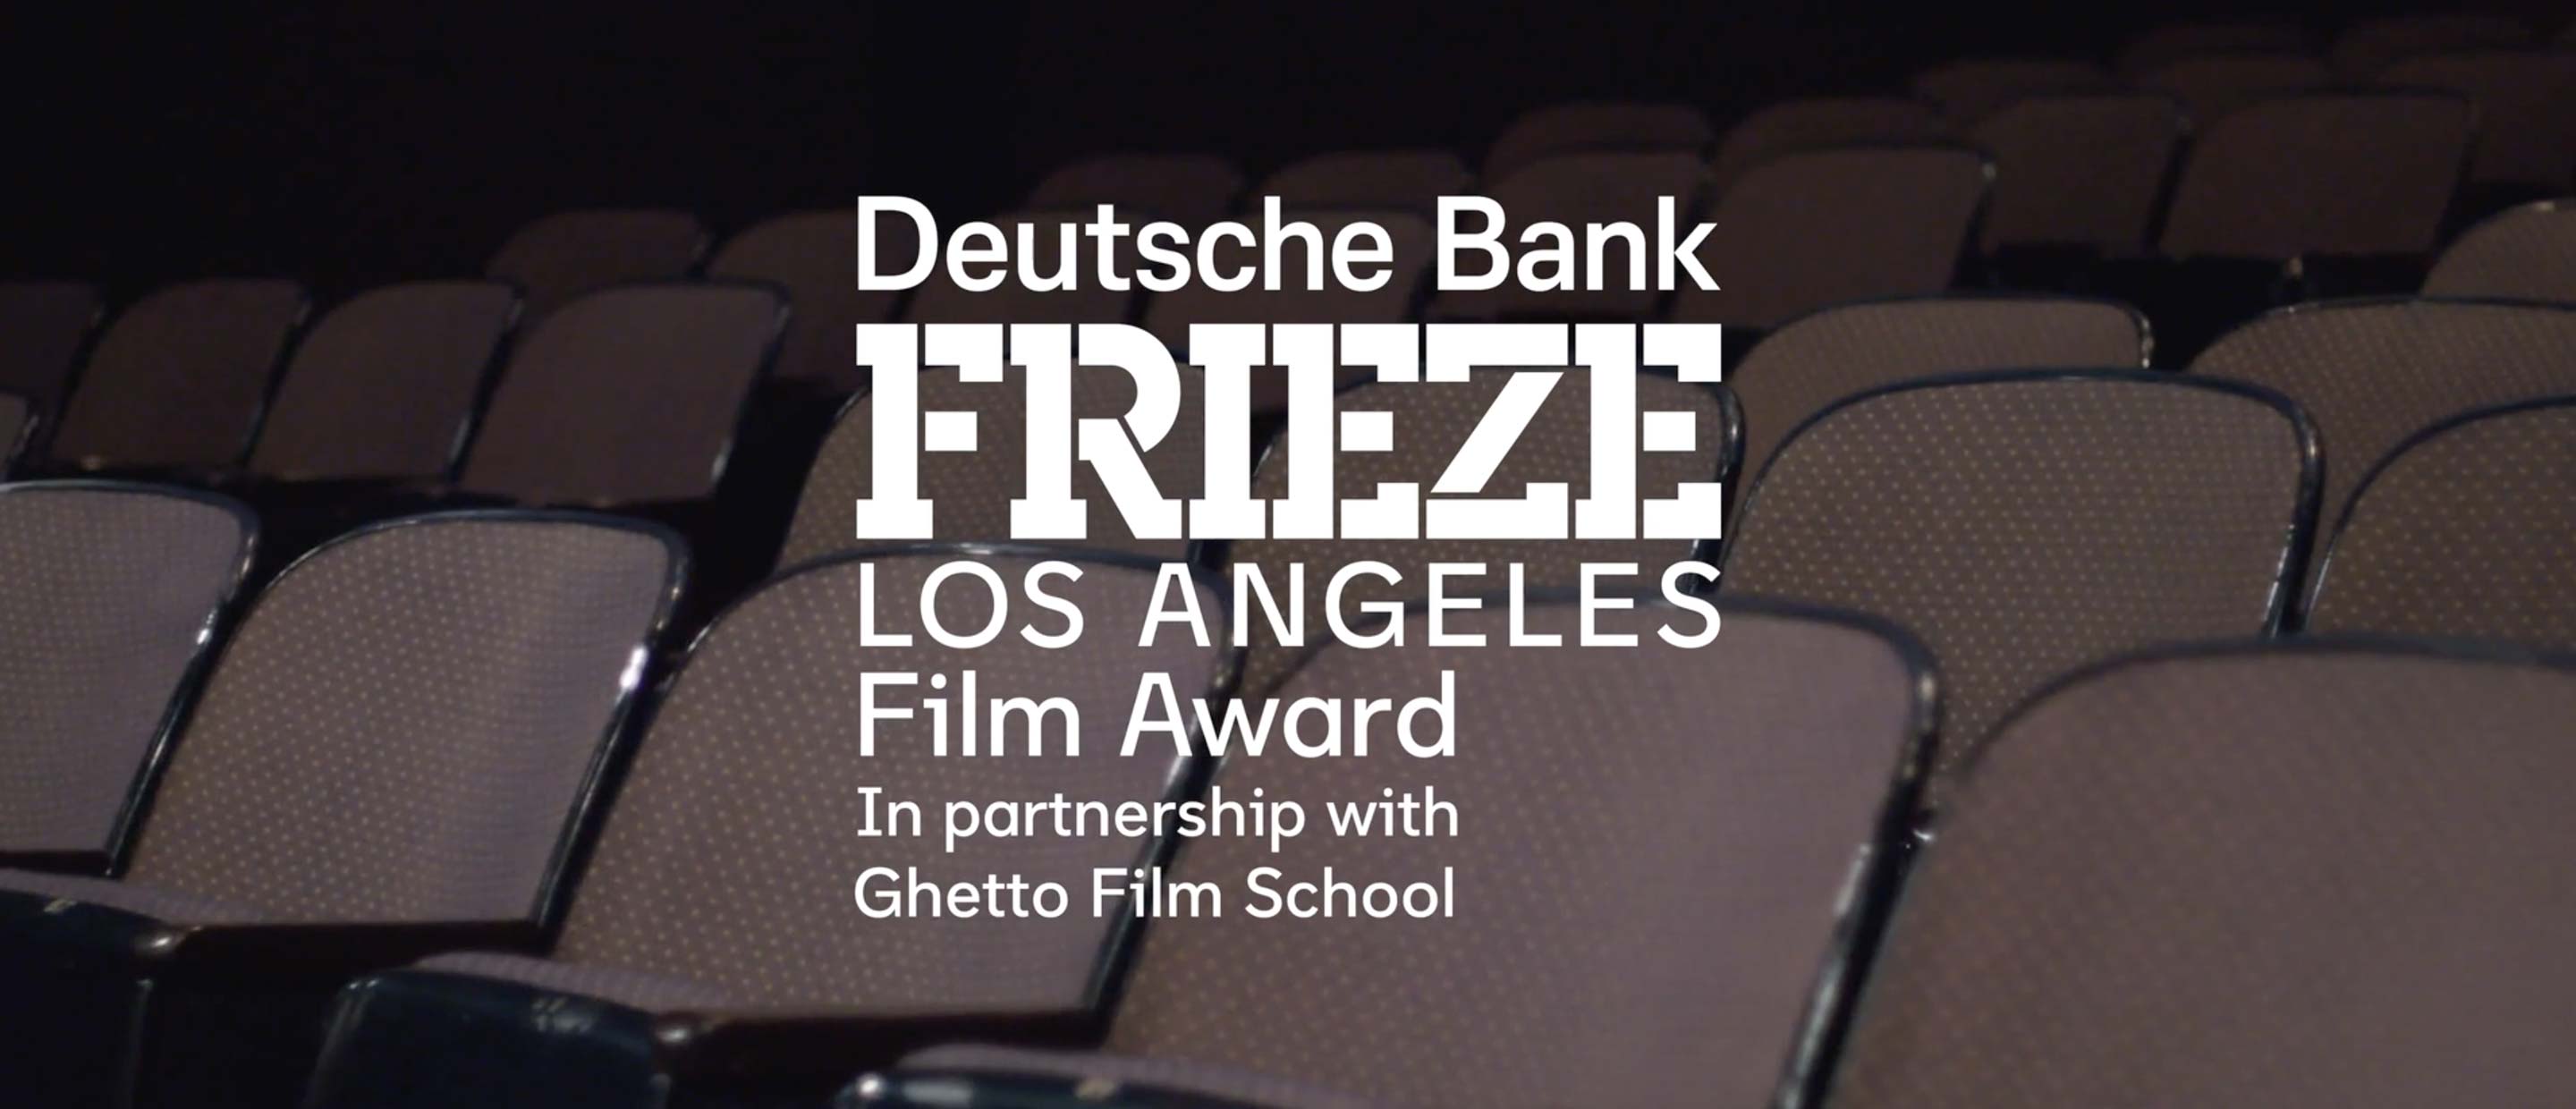 Deutsche Bank Film Award LA 1